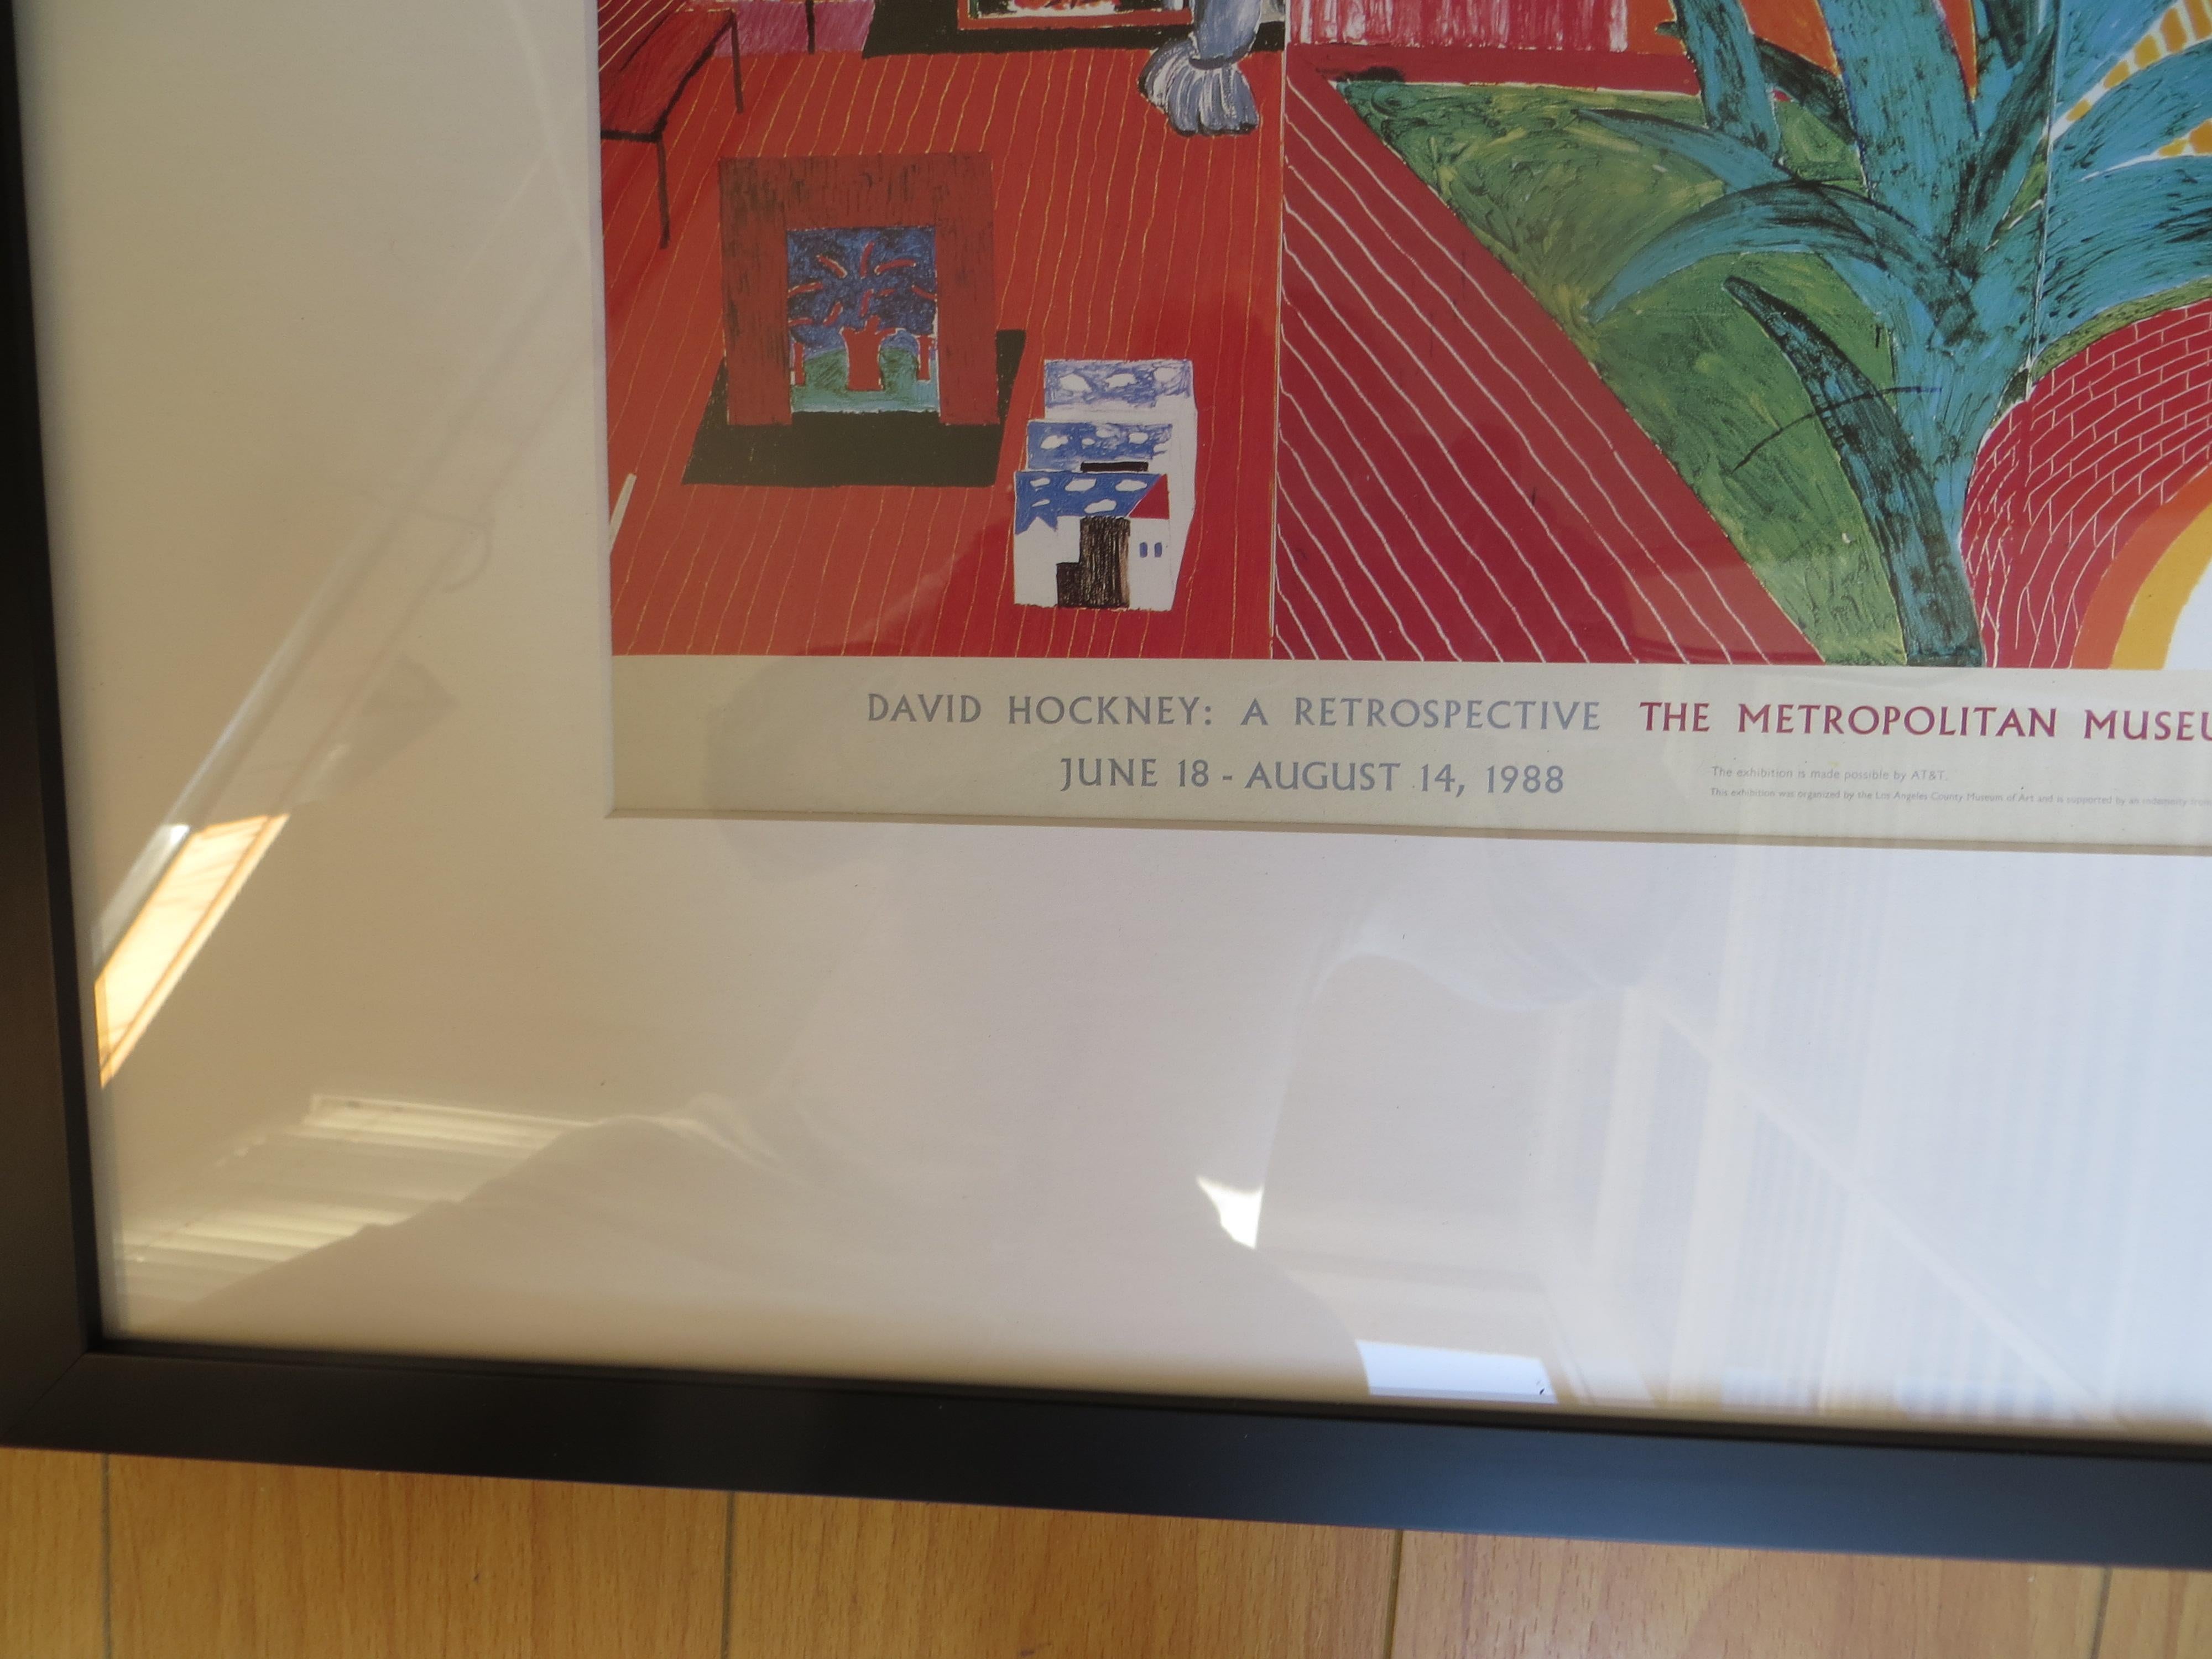 David Hockney, A Retrospective, Pop Art Print Exhibition Poster, 1988  For Sale 1